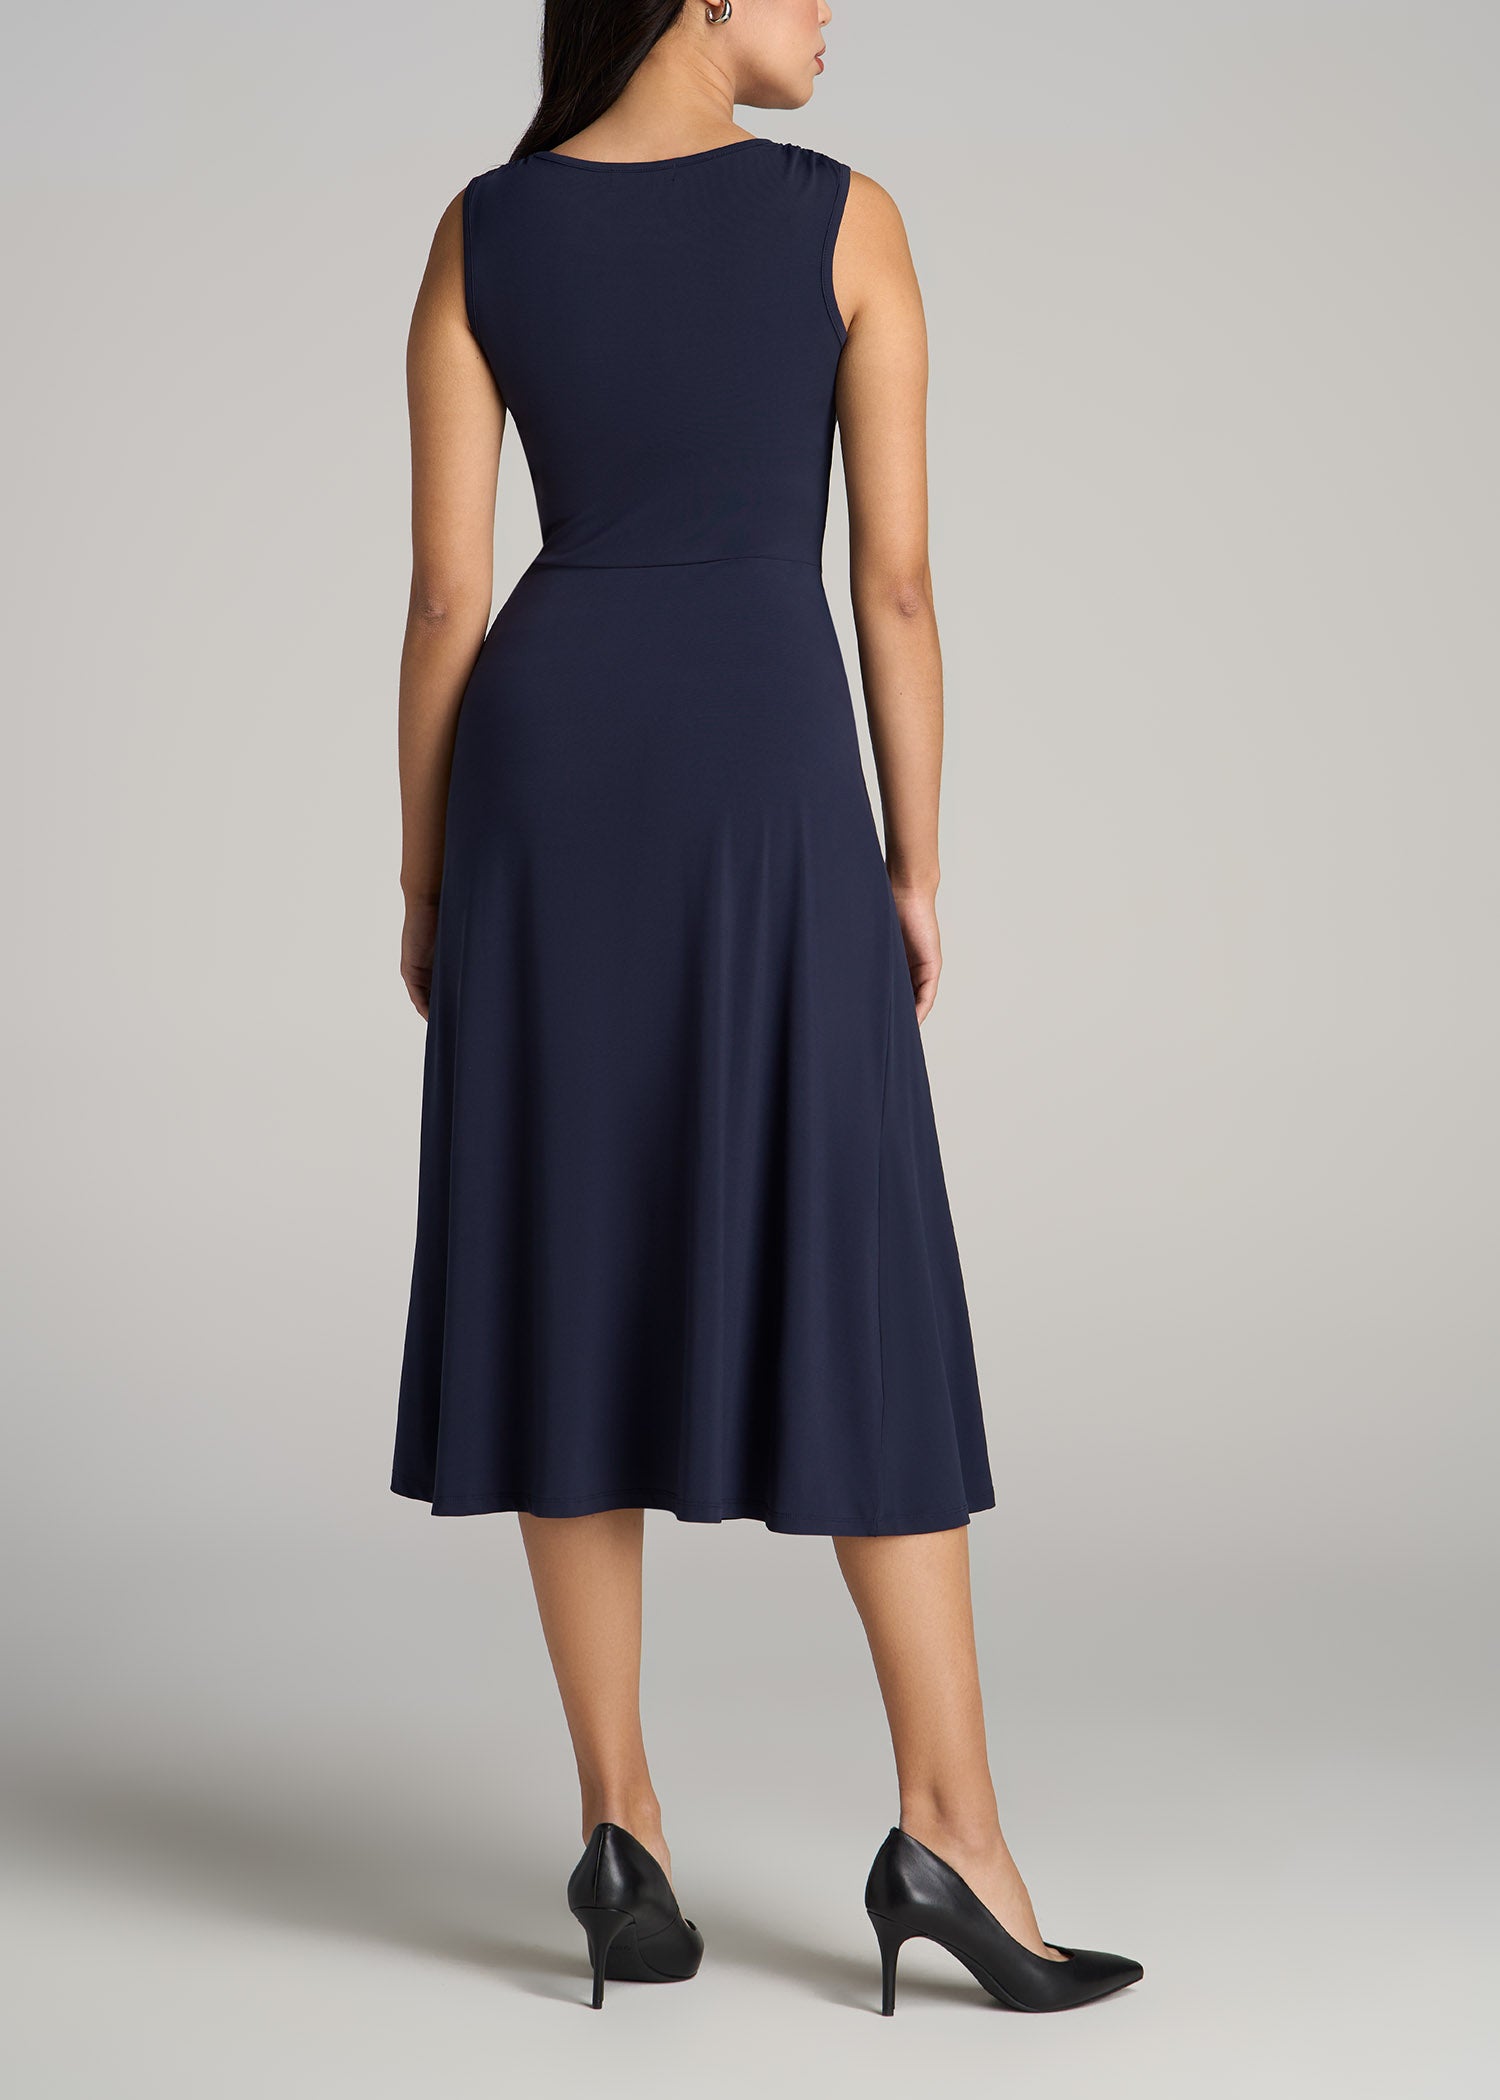 Sleeveless Knot Front Dress for Tall Women | American Tall